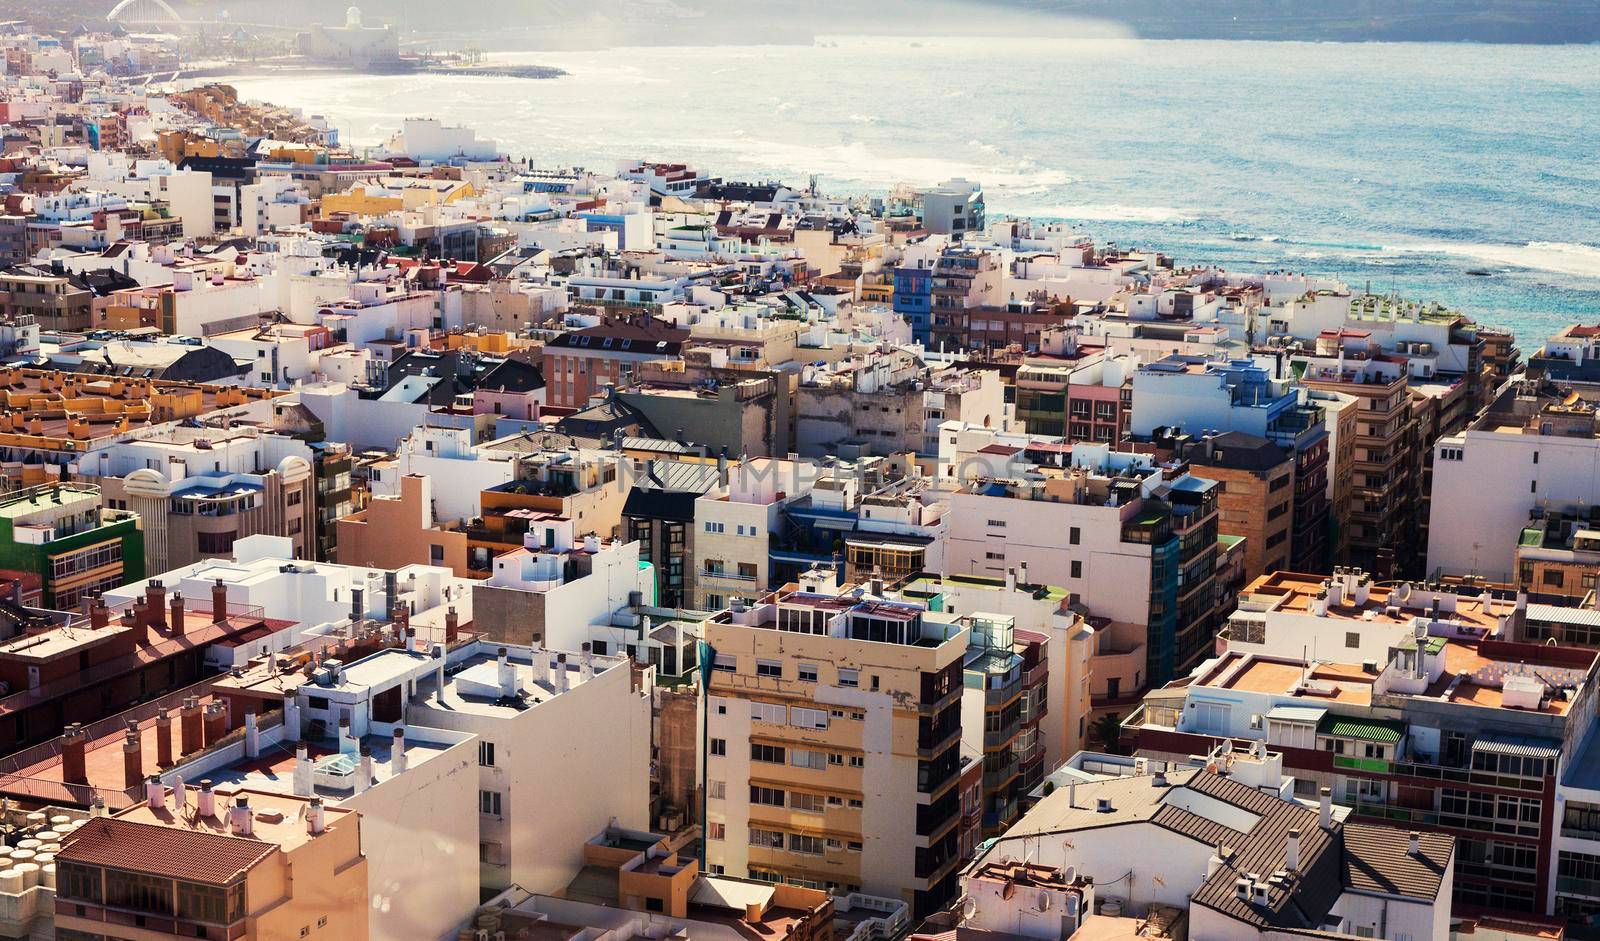 Panorama of Las Palmas by benkrut